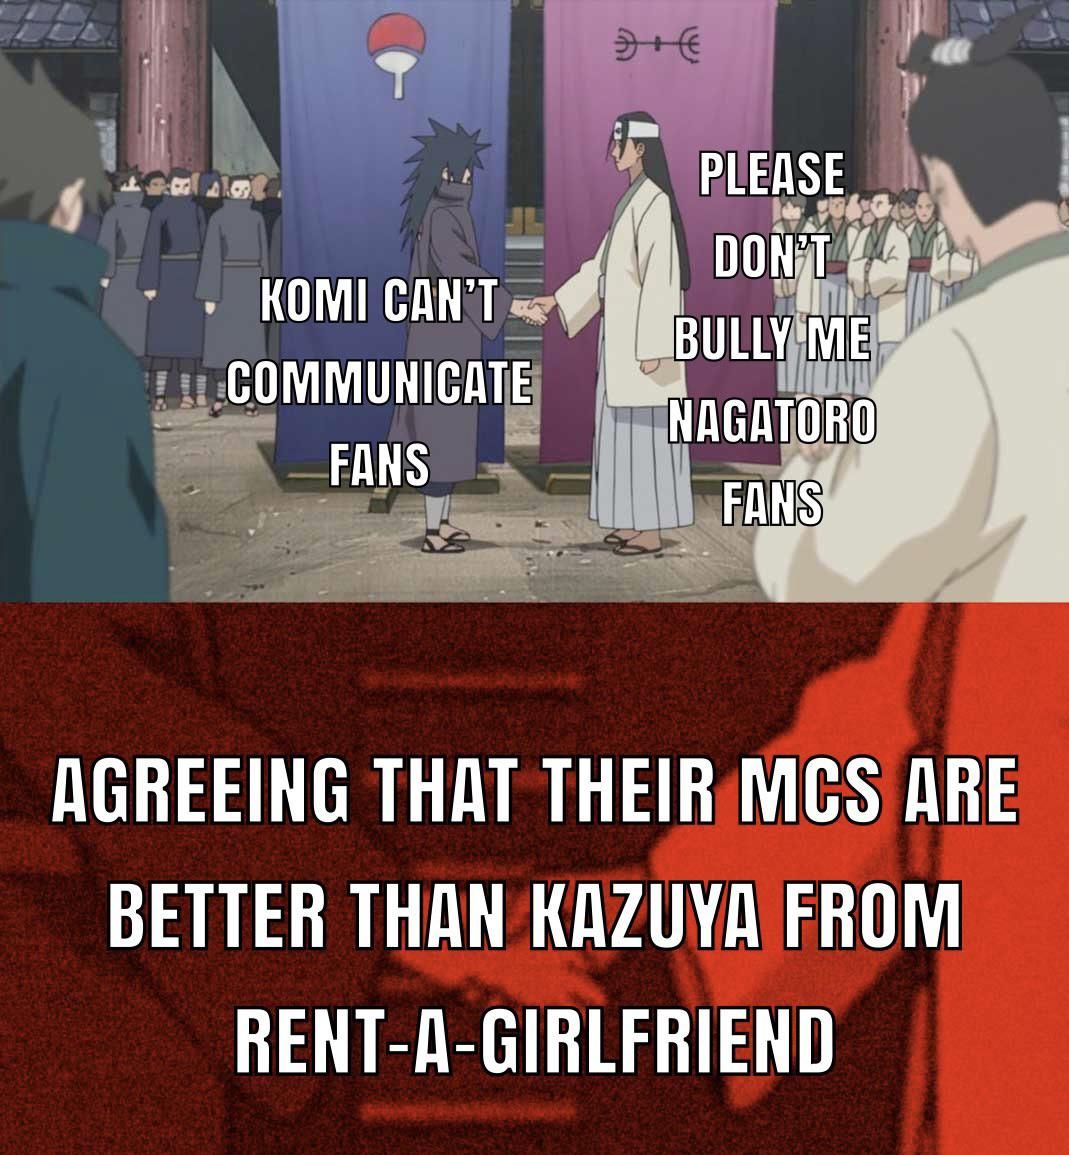 Tbh, every MC is better than Kazuya